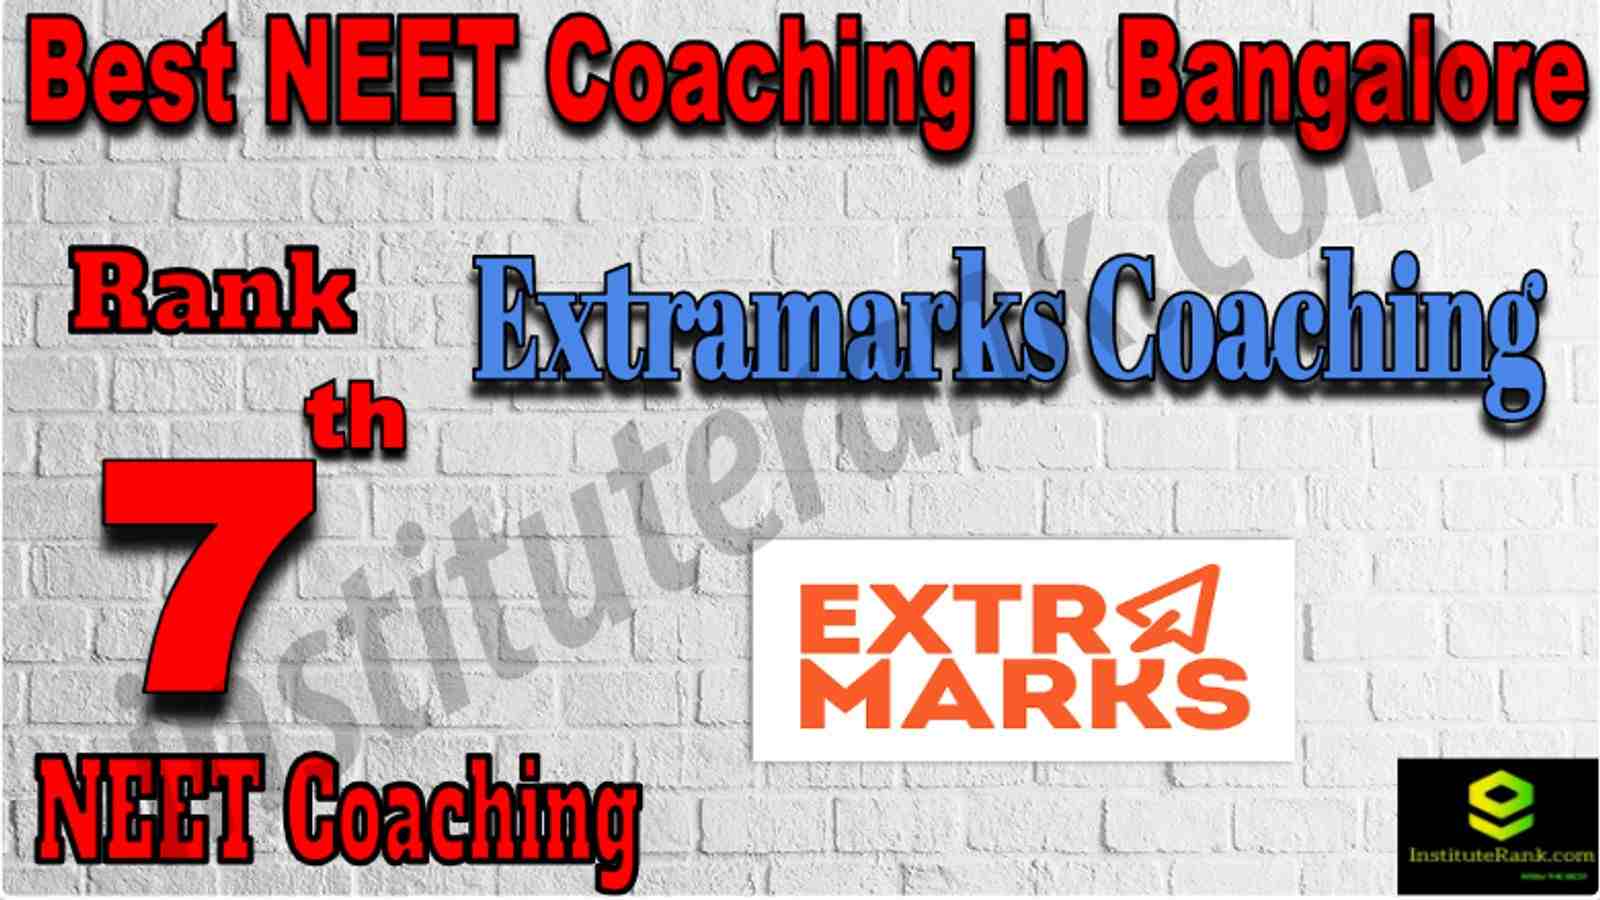 Rank 7 Best NEET Coaching in Bangalore